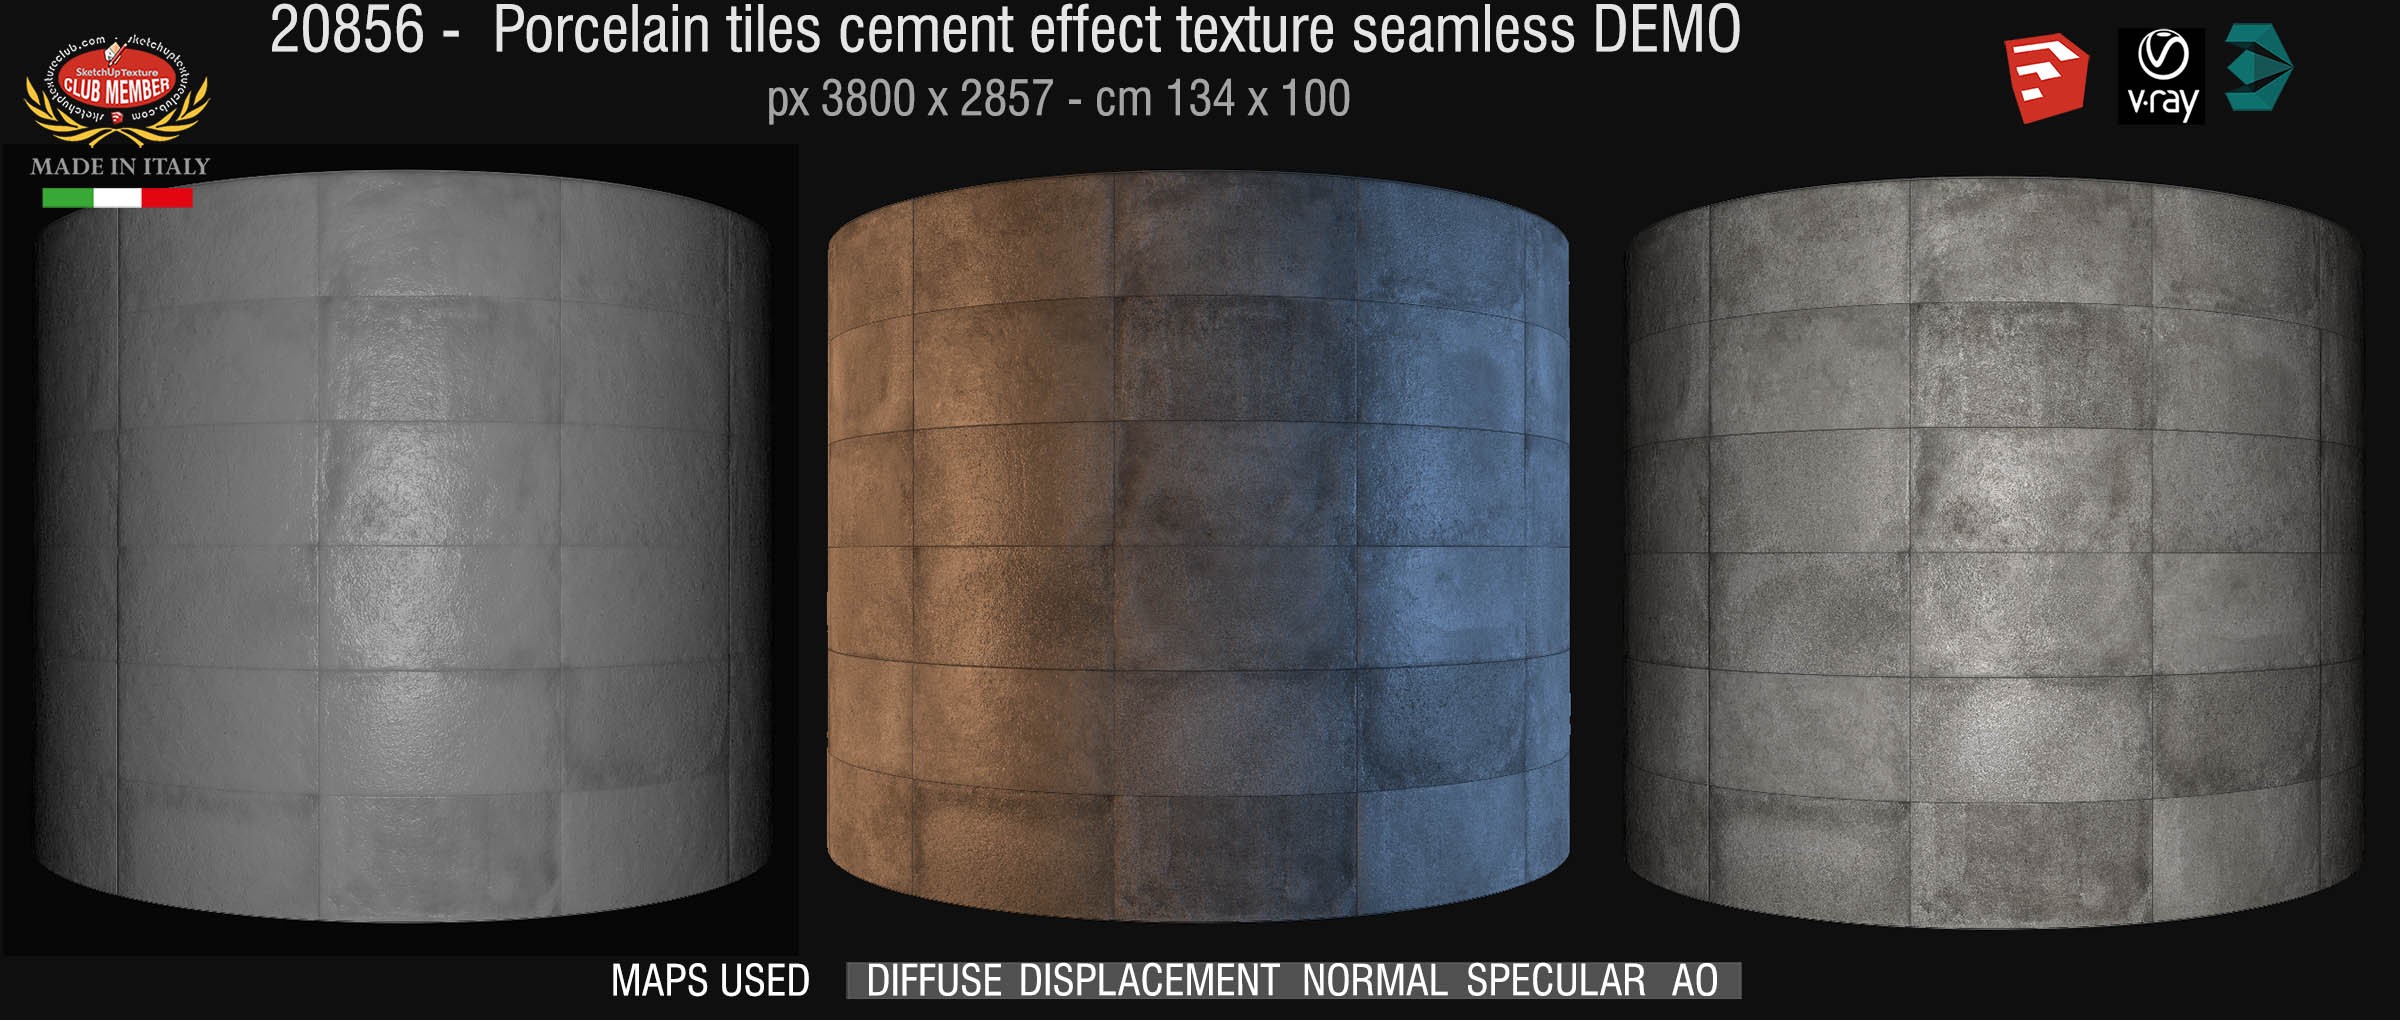 20856 HR Porcelain tiles cement effect texture seamless + maps DEMO